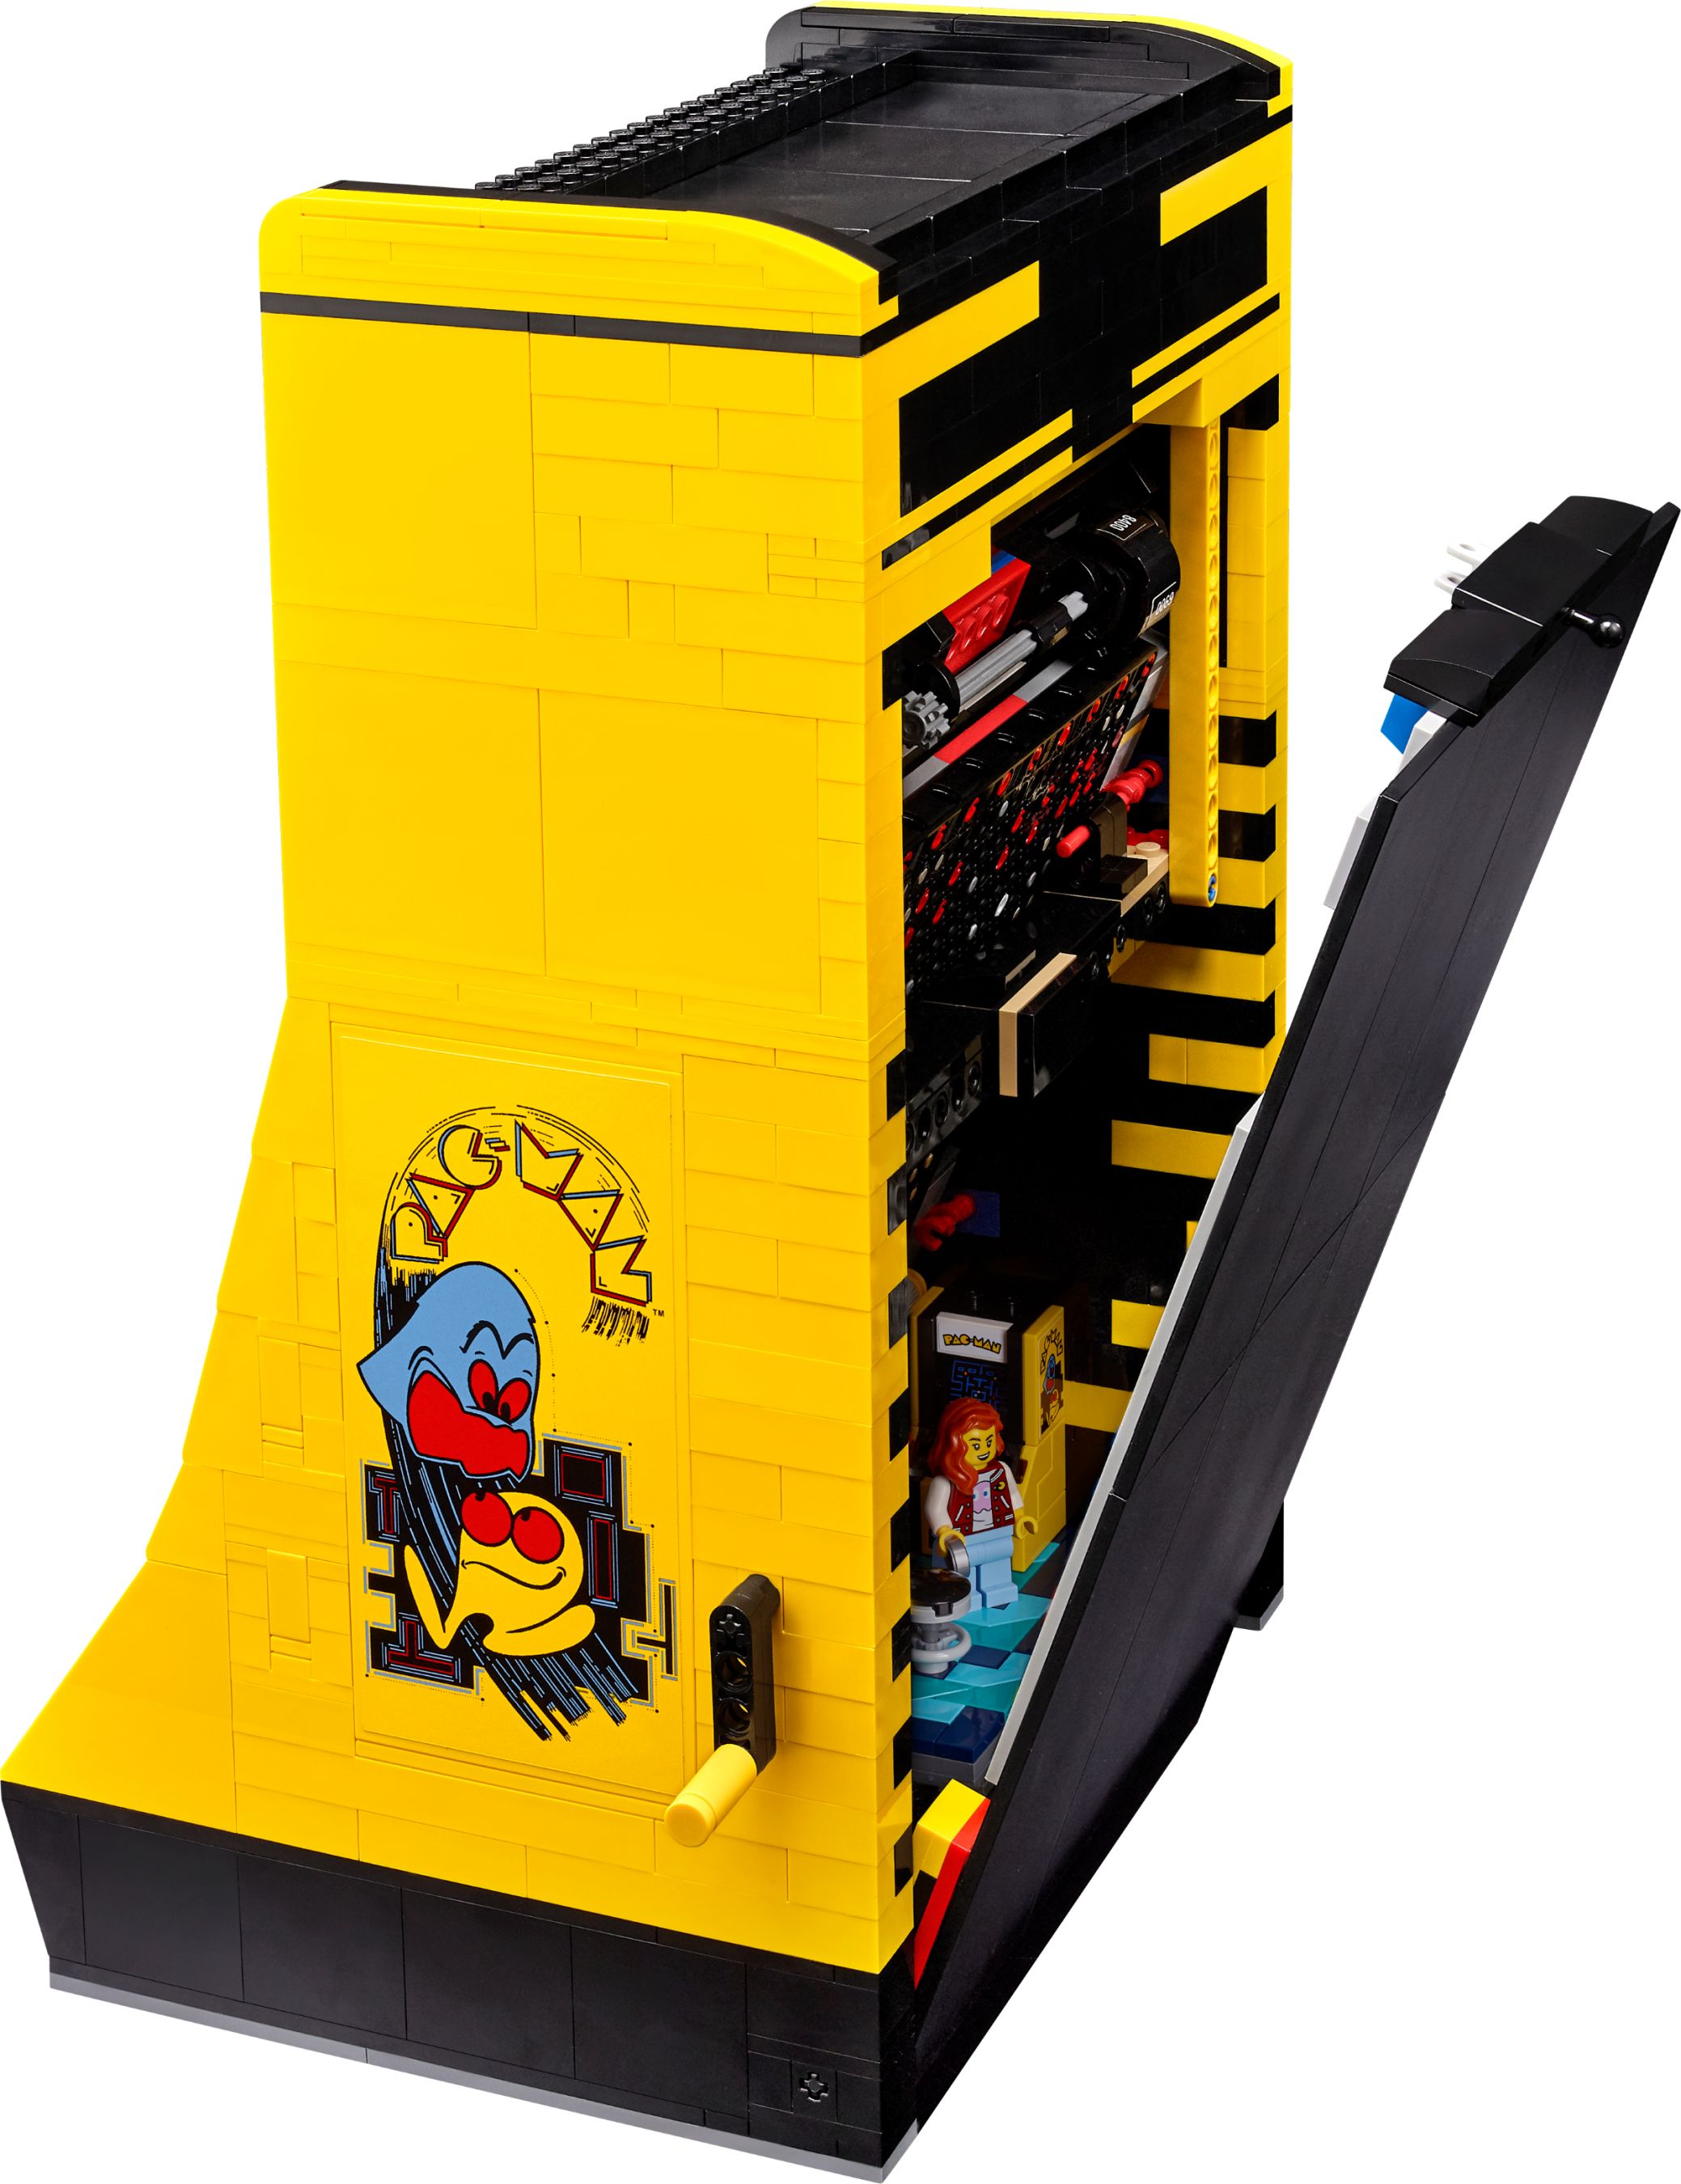 LEGO Advanced Models 10323 PAC-MAN Spielautomat LEGO_10323_alt3.jpg